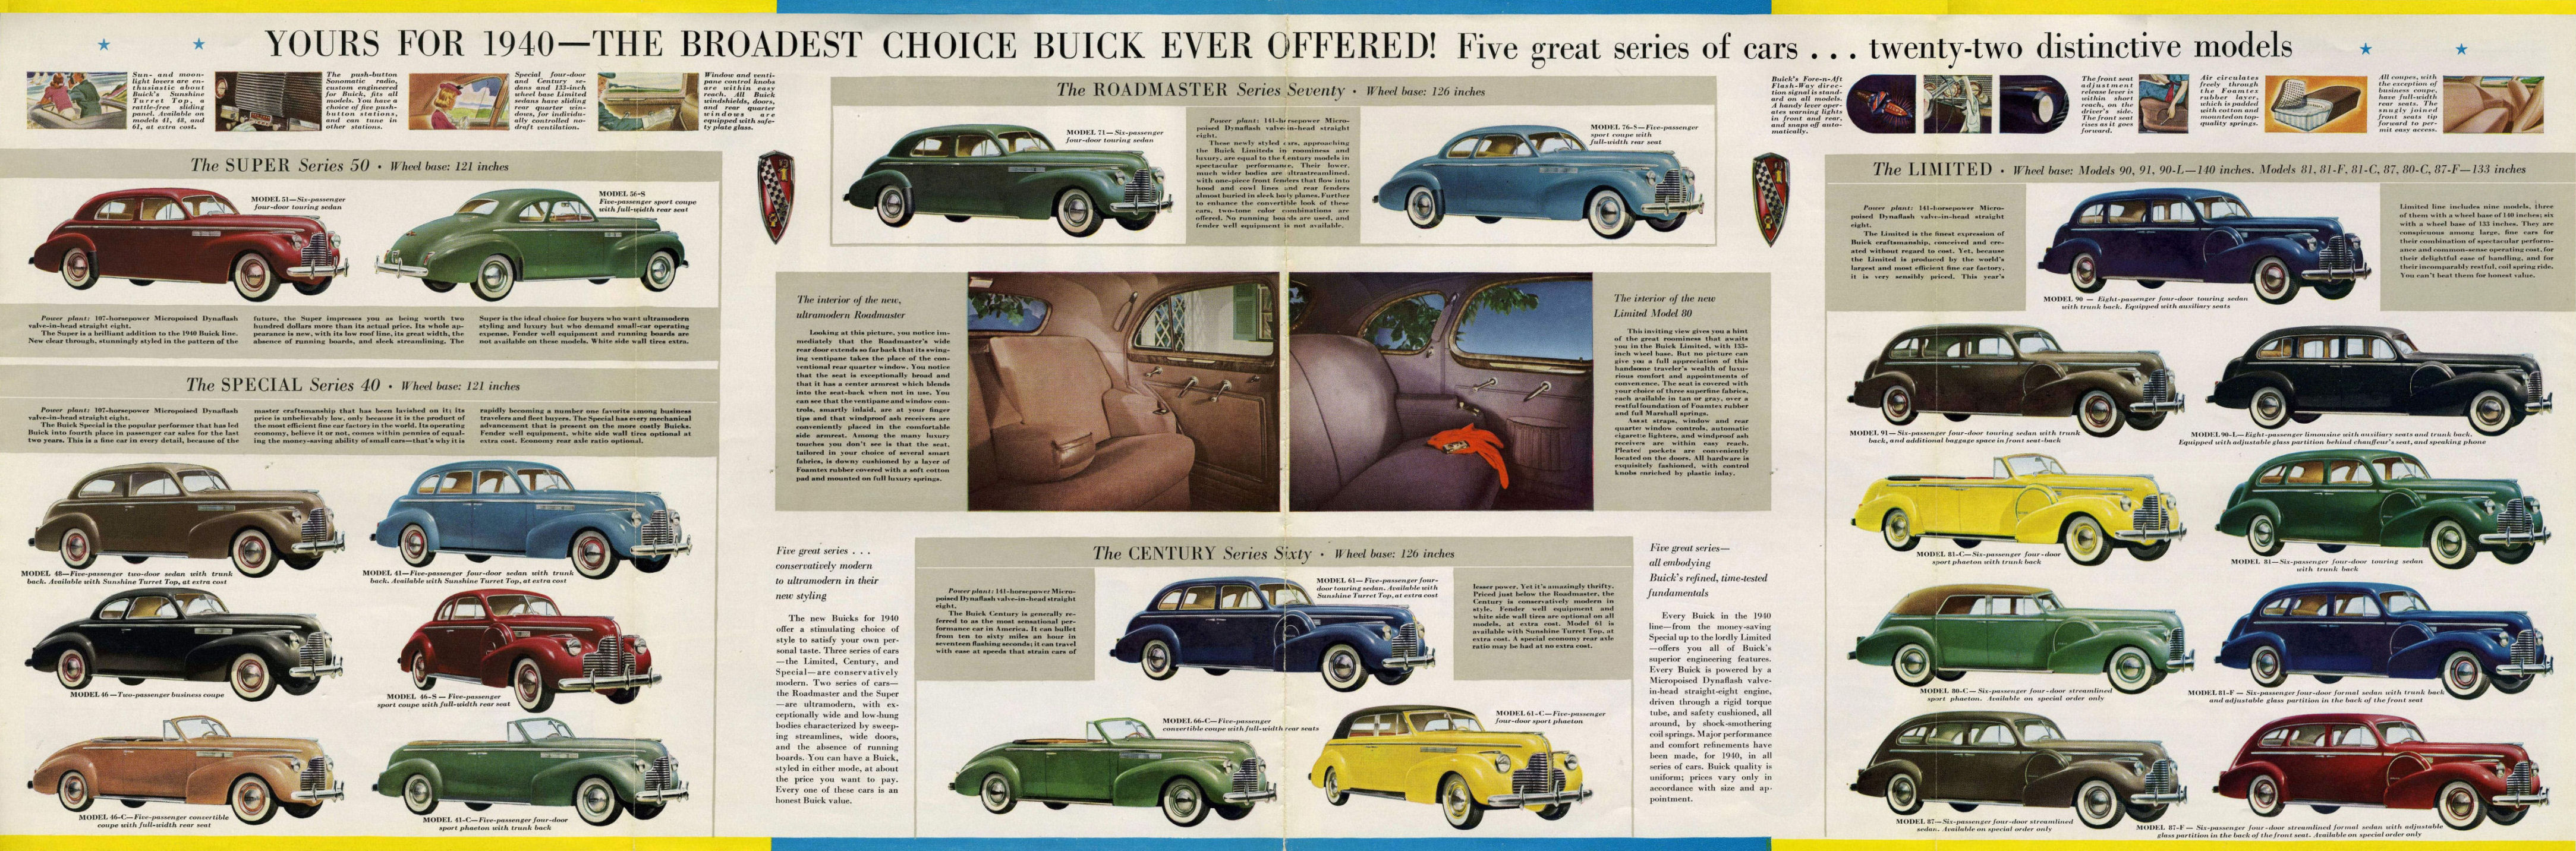 1940 Buick Foldout (D)- Front Open